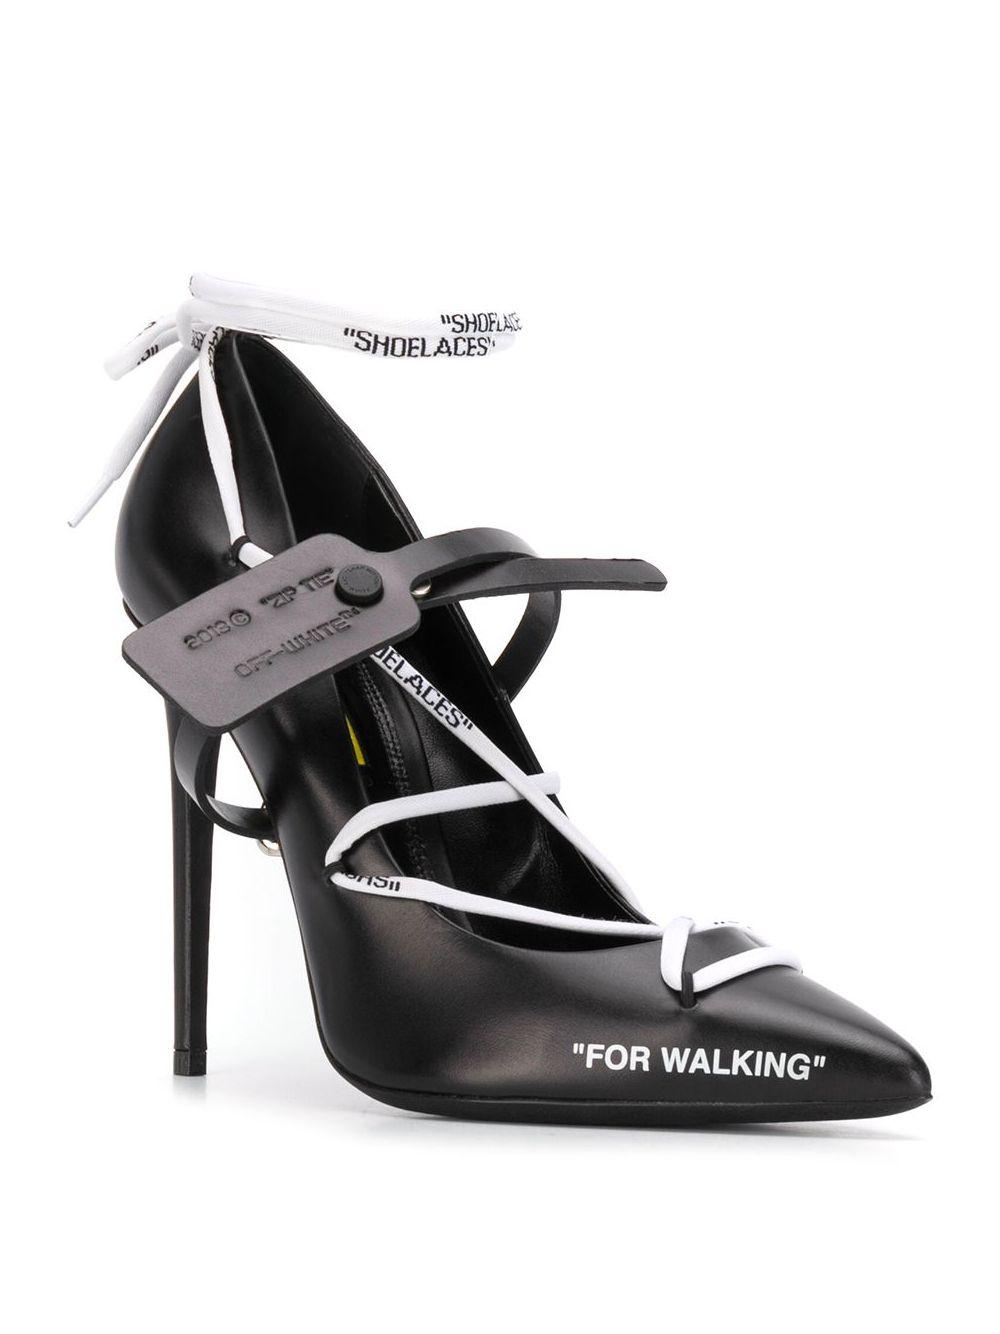 Off-White c/o Virgil Abloh Ankle Tag Sandal Pumps in Black | Lyst